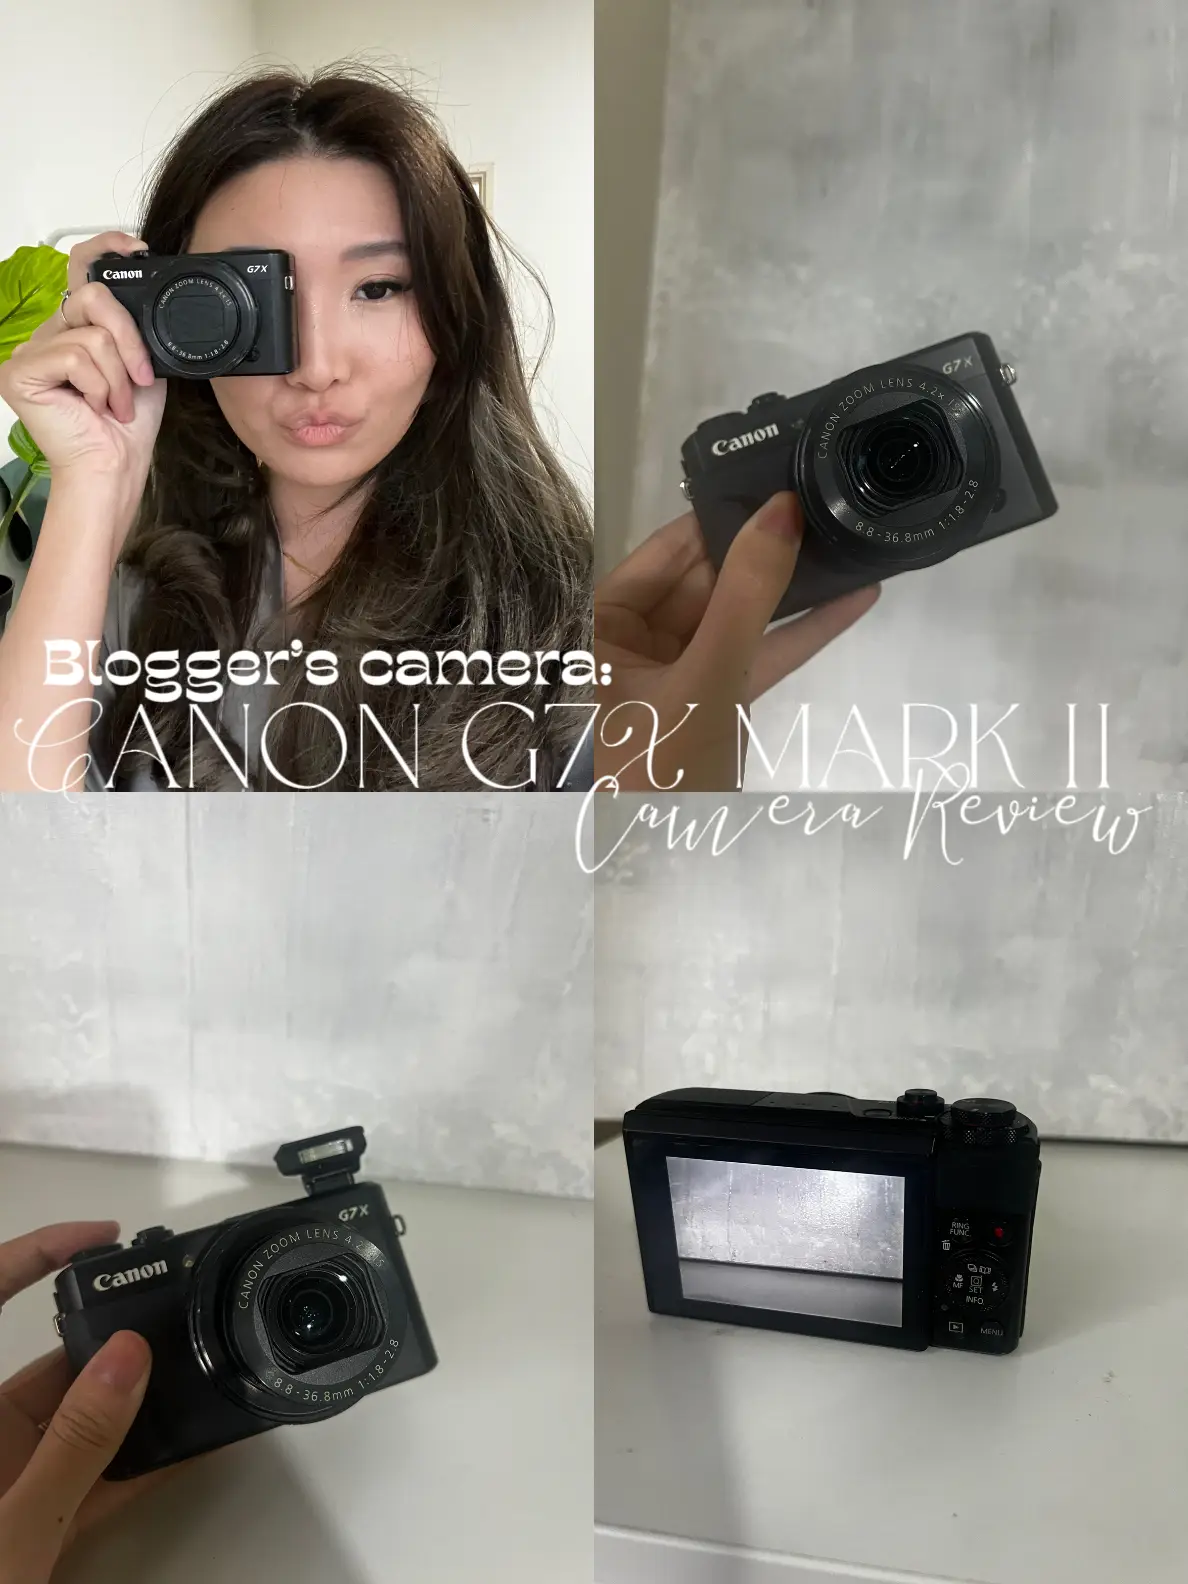 Buy Canon Powershot G7 X Mark III Premium Vlogger Kit, Black in PowerShot  Cameras — Canon UK Store